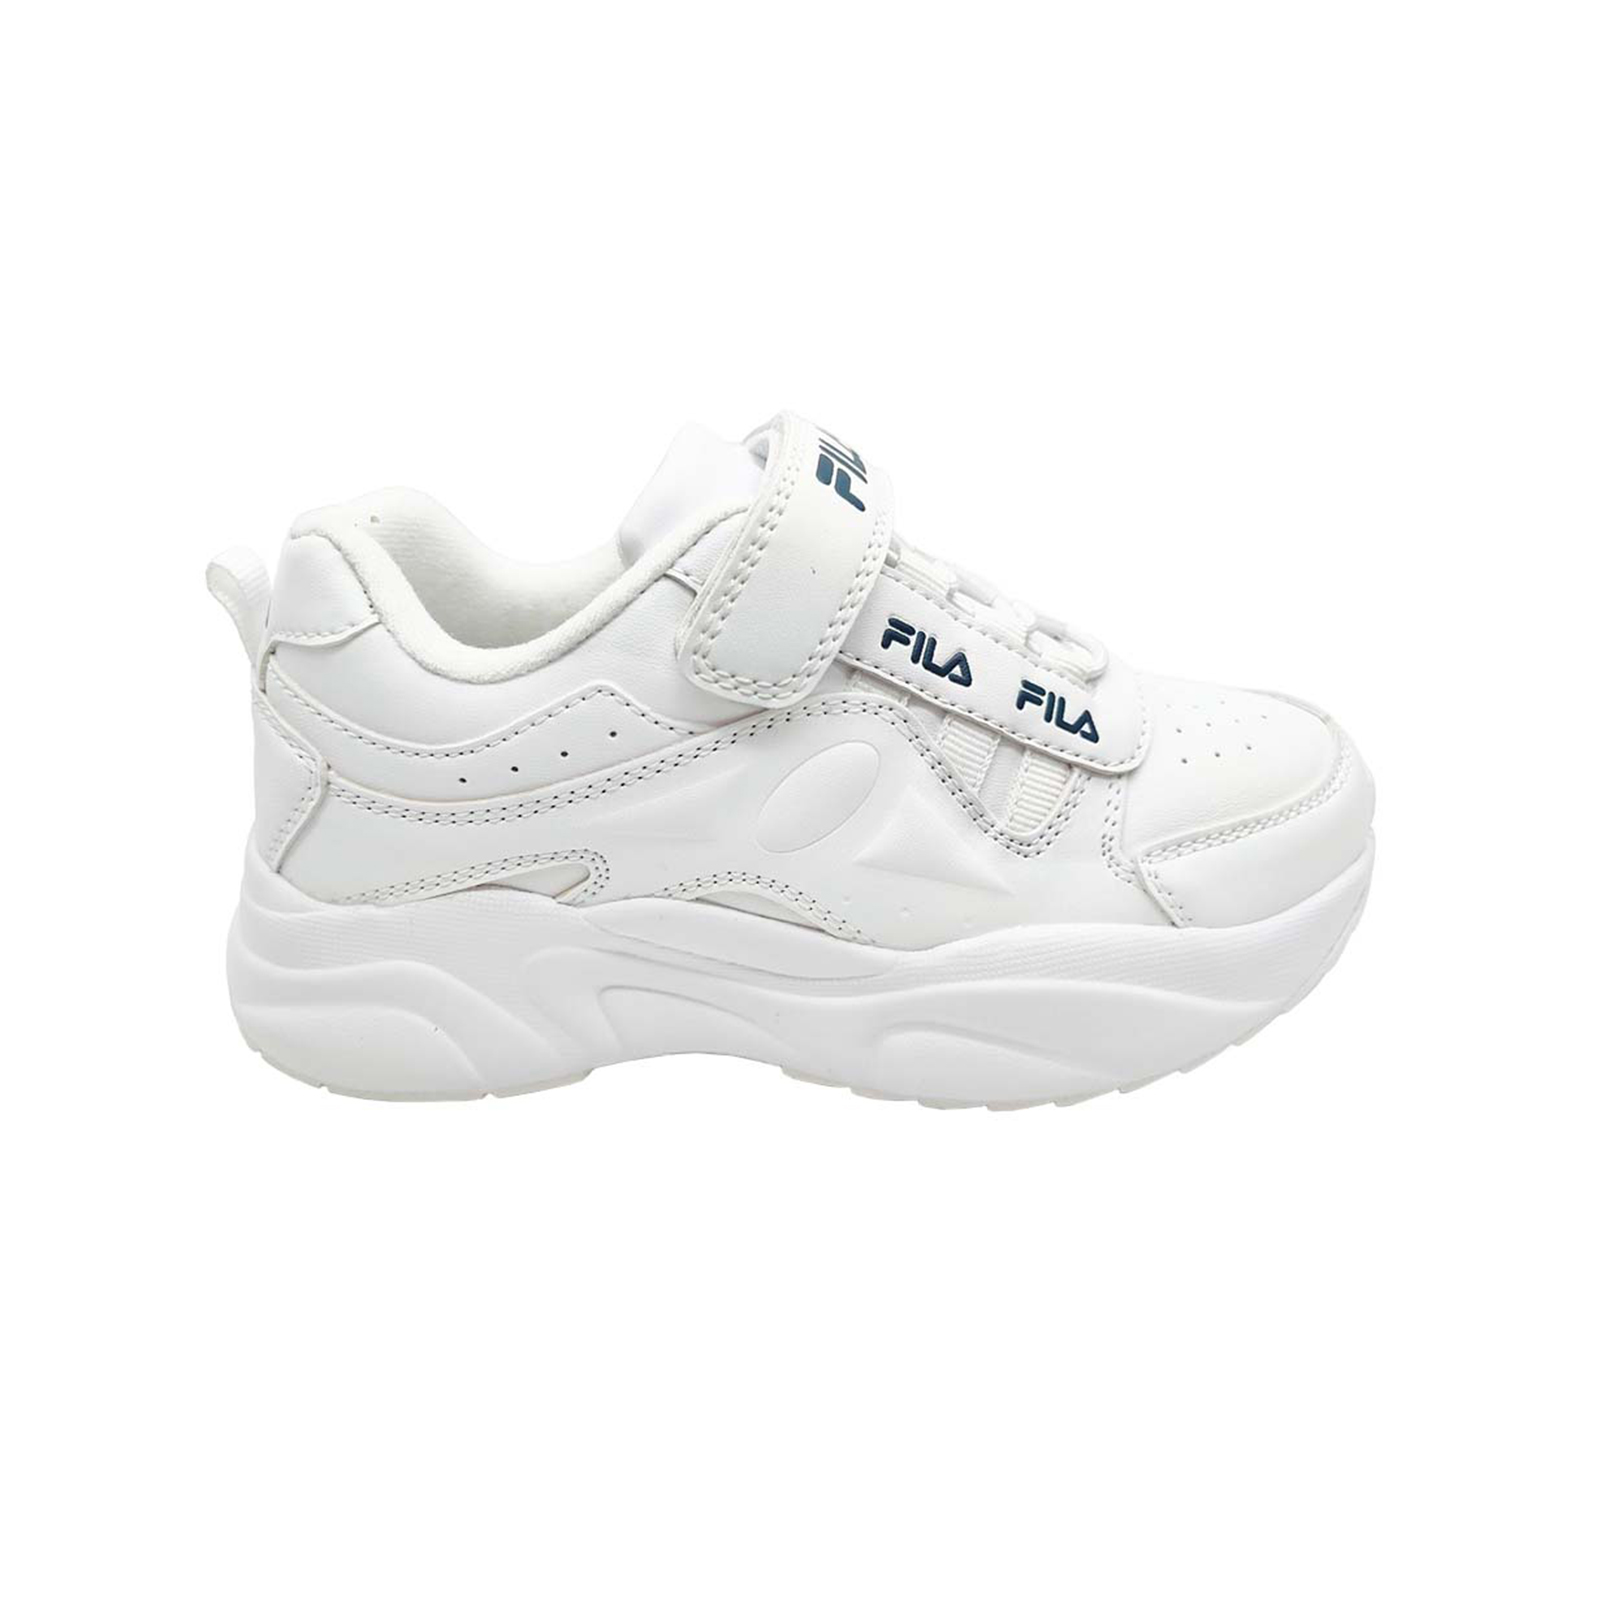 Fila - MEMORY MOTION 2 V FOOTWEAR - WHITE WHITE Παιδικά > Παπούτσια > Αθλητικά > Παπούτσι Low Cut